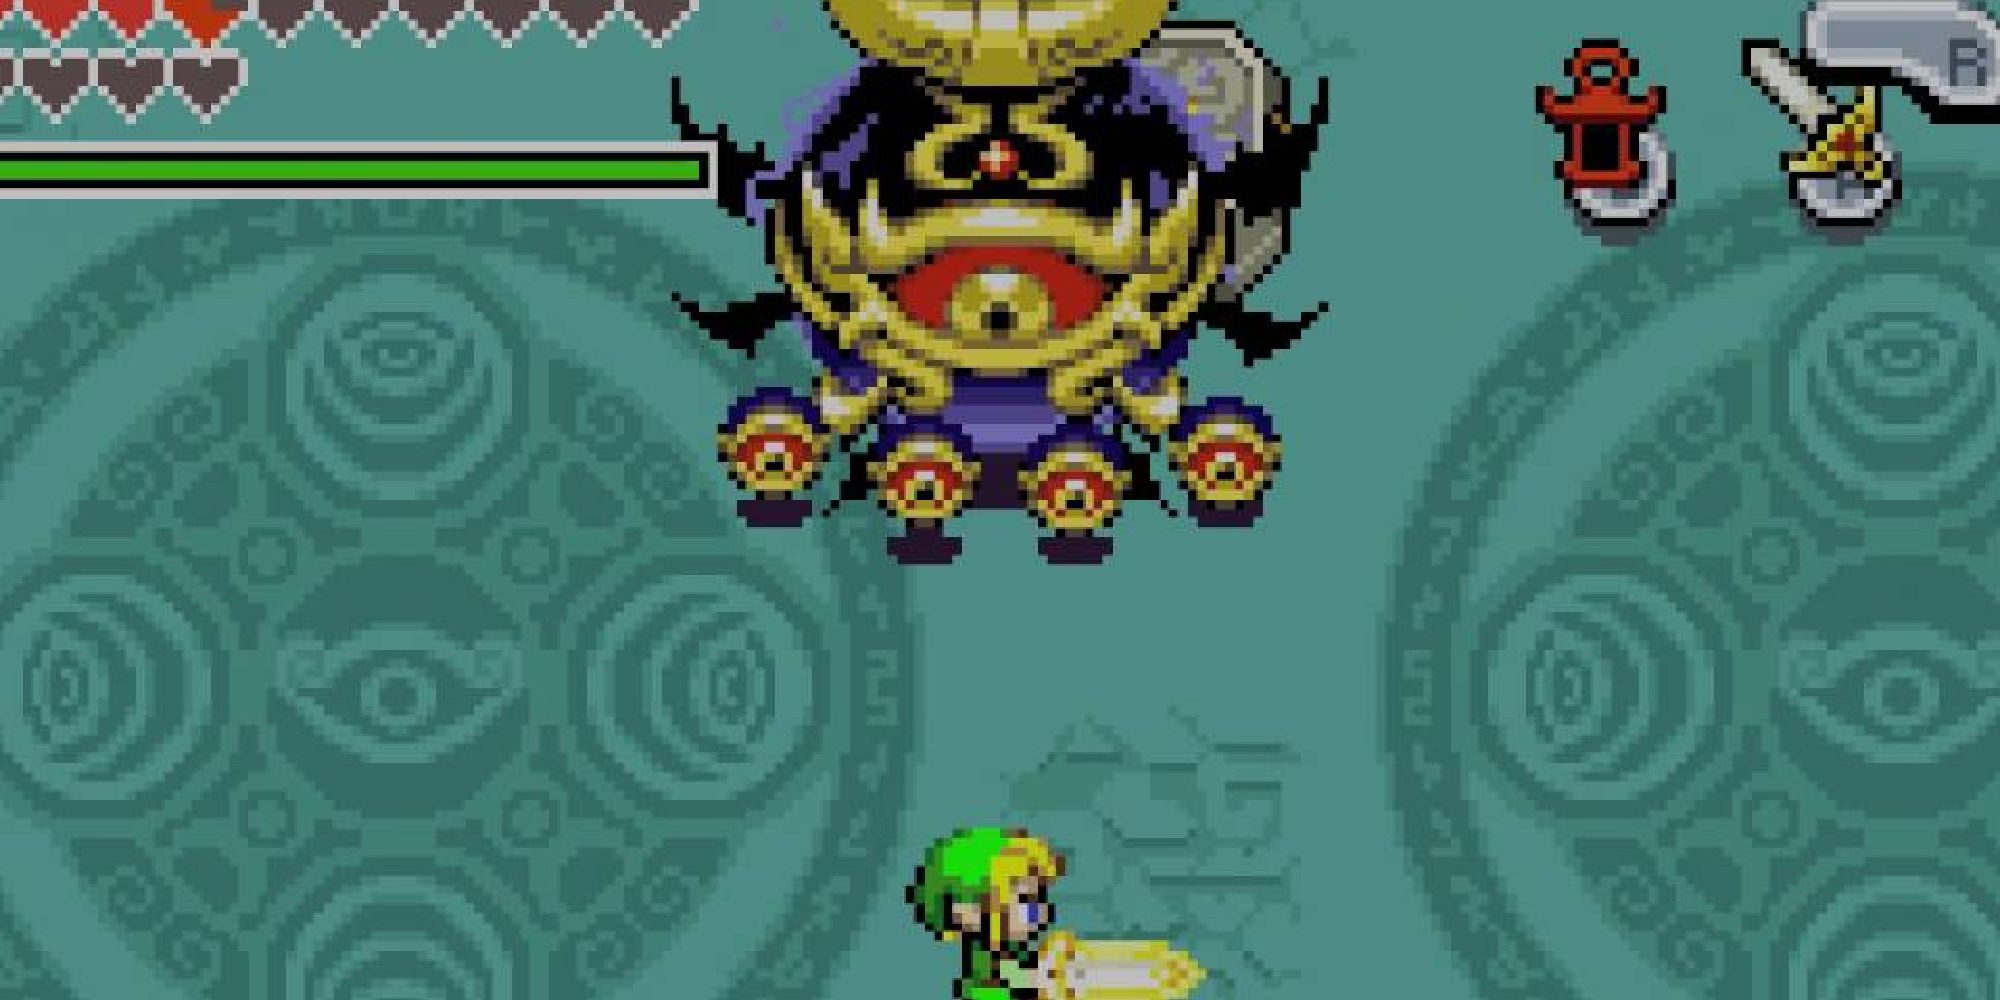 Link fighting Vaati's Wrath in The Minish Cap